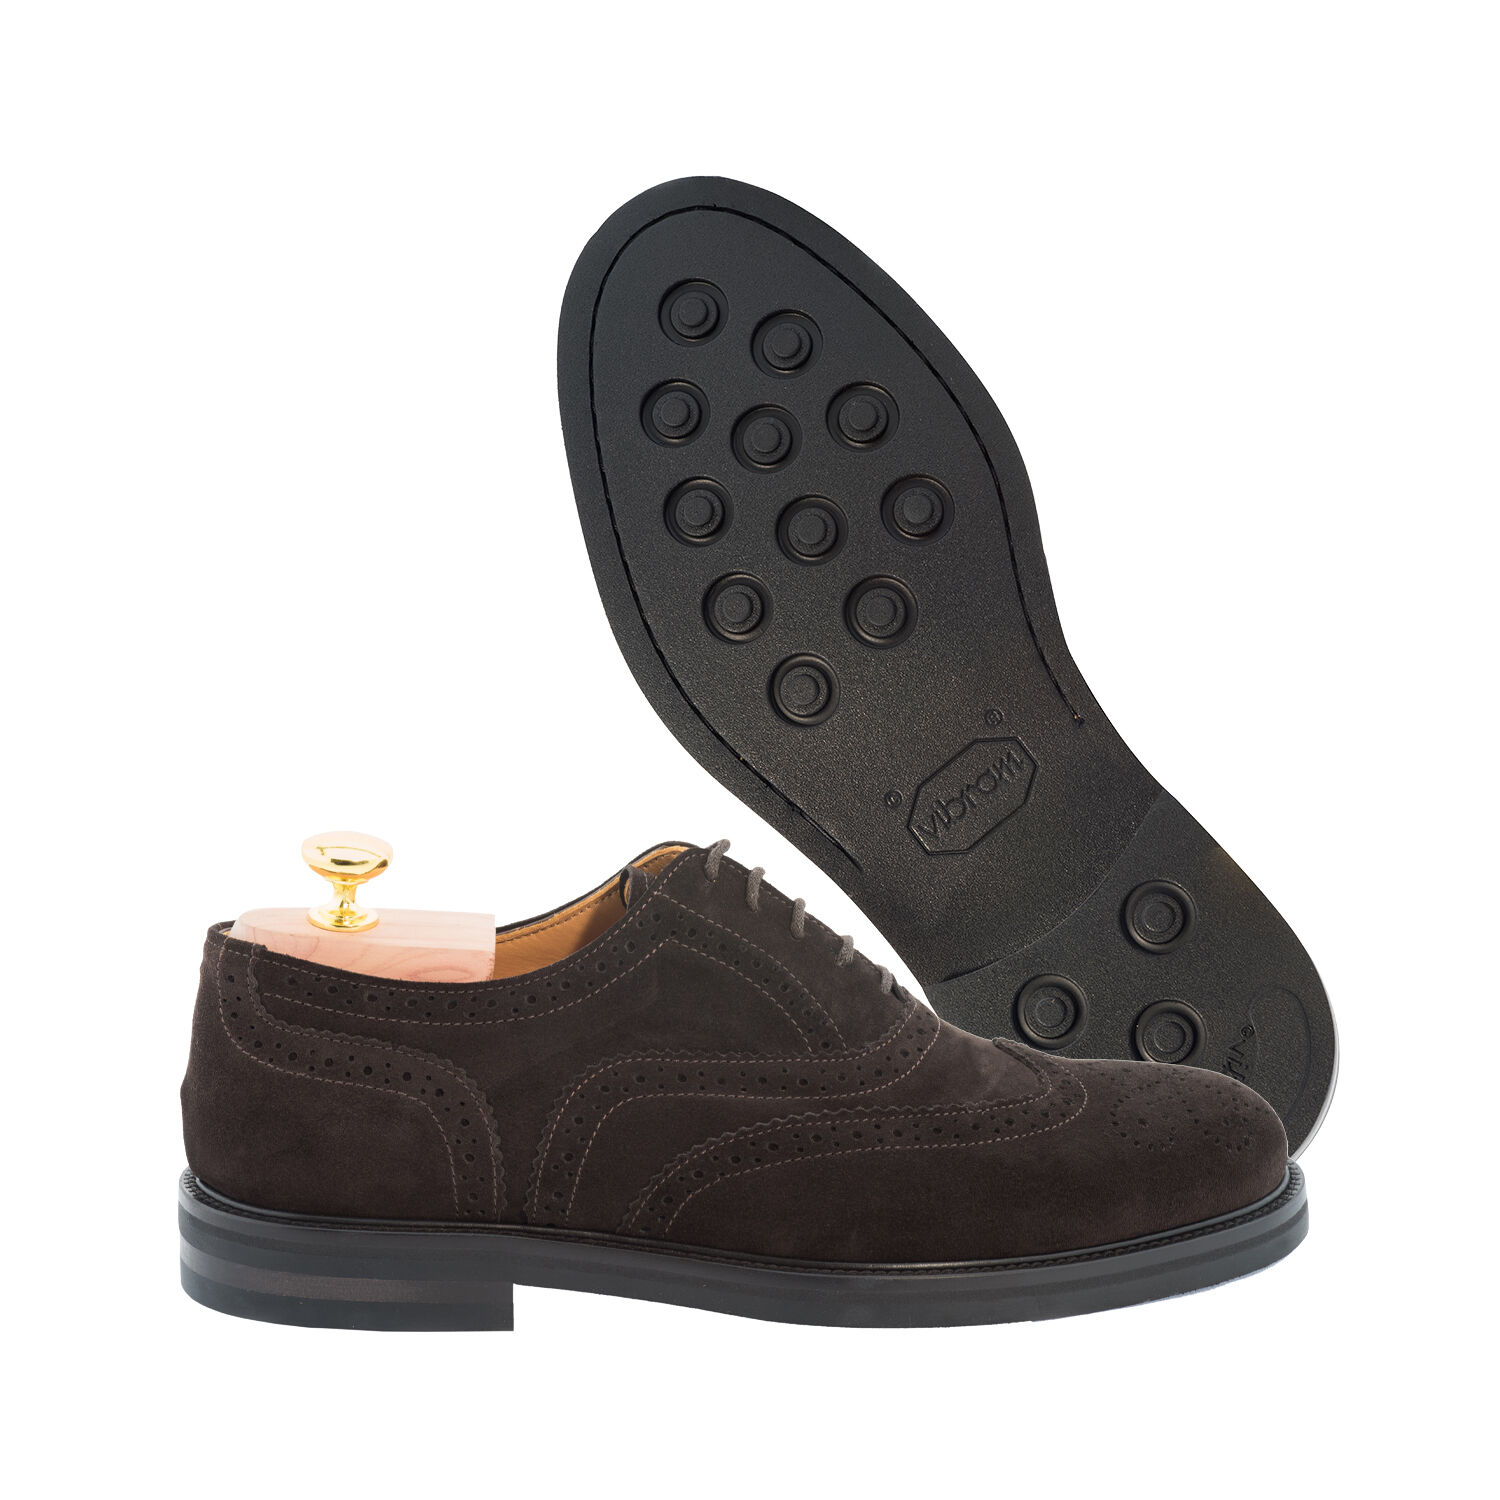 dress shoes with vibram soles